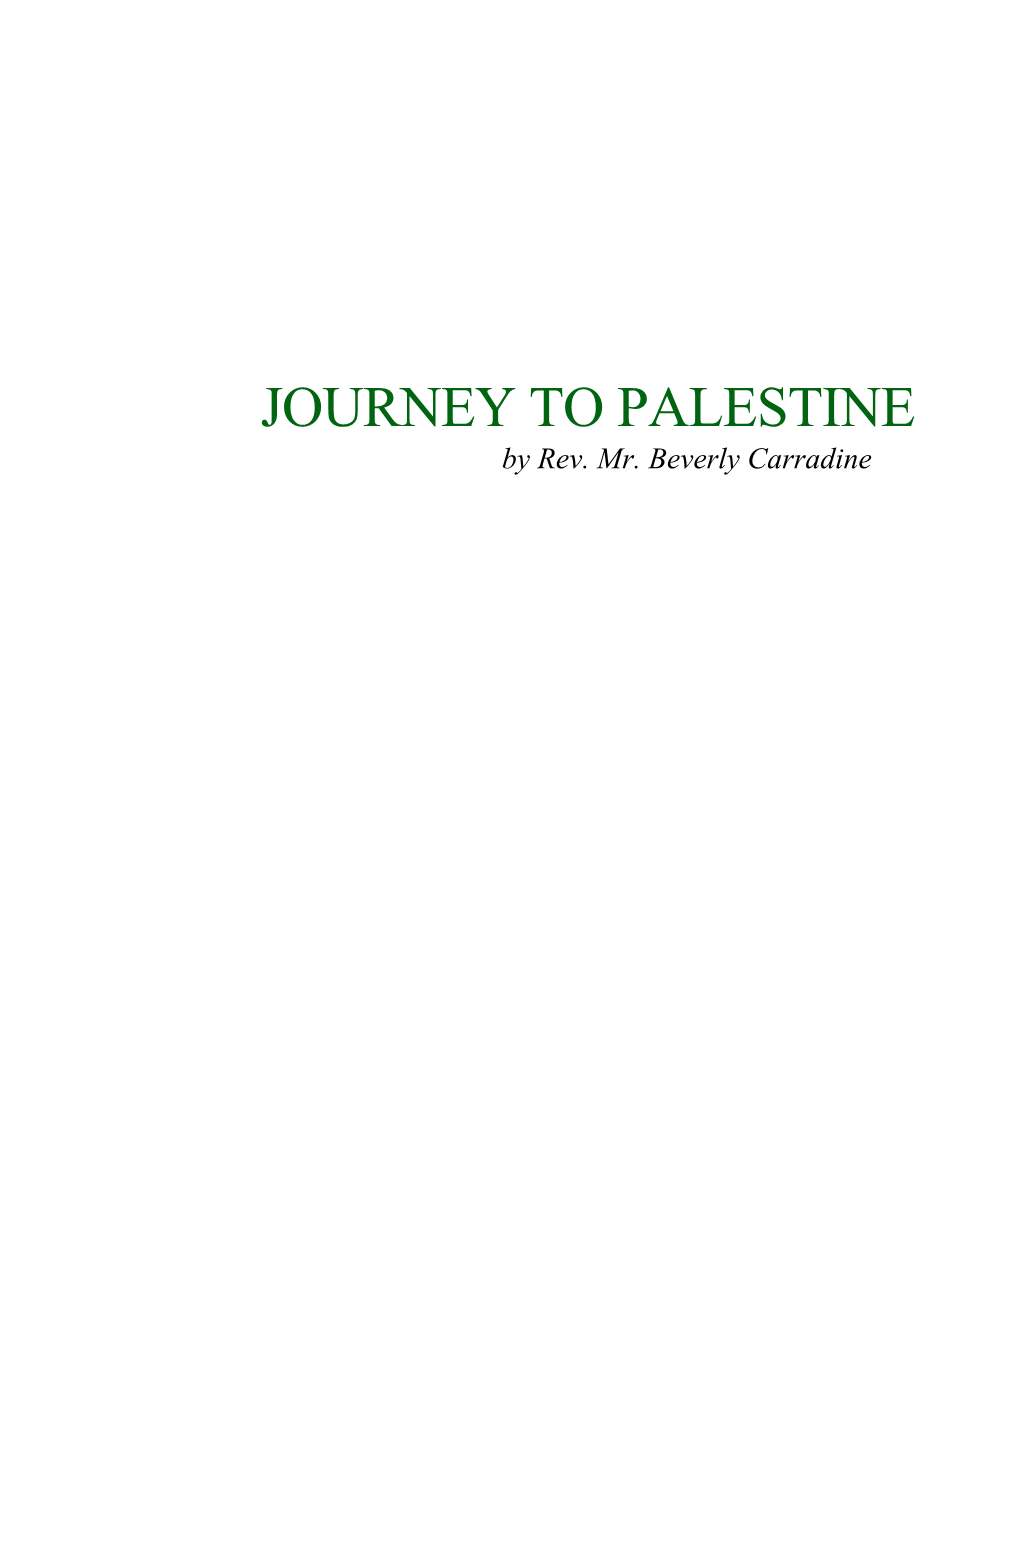 A Journey to Palestine